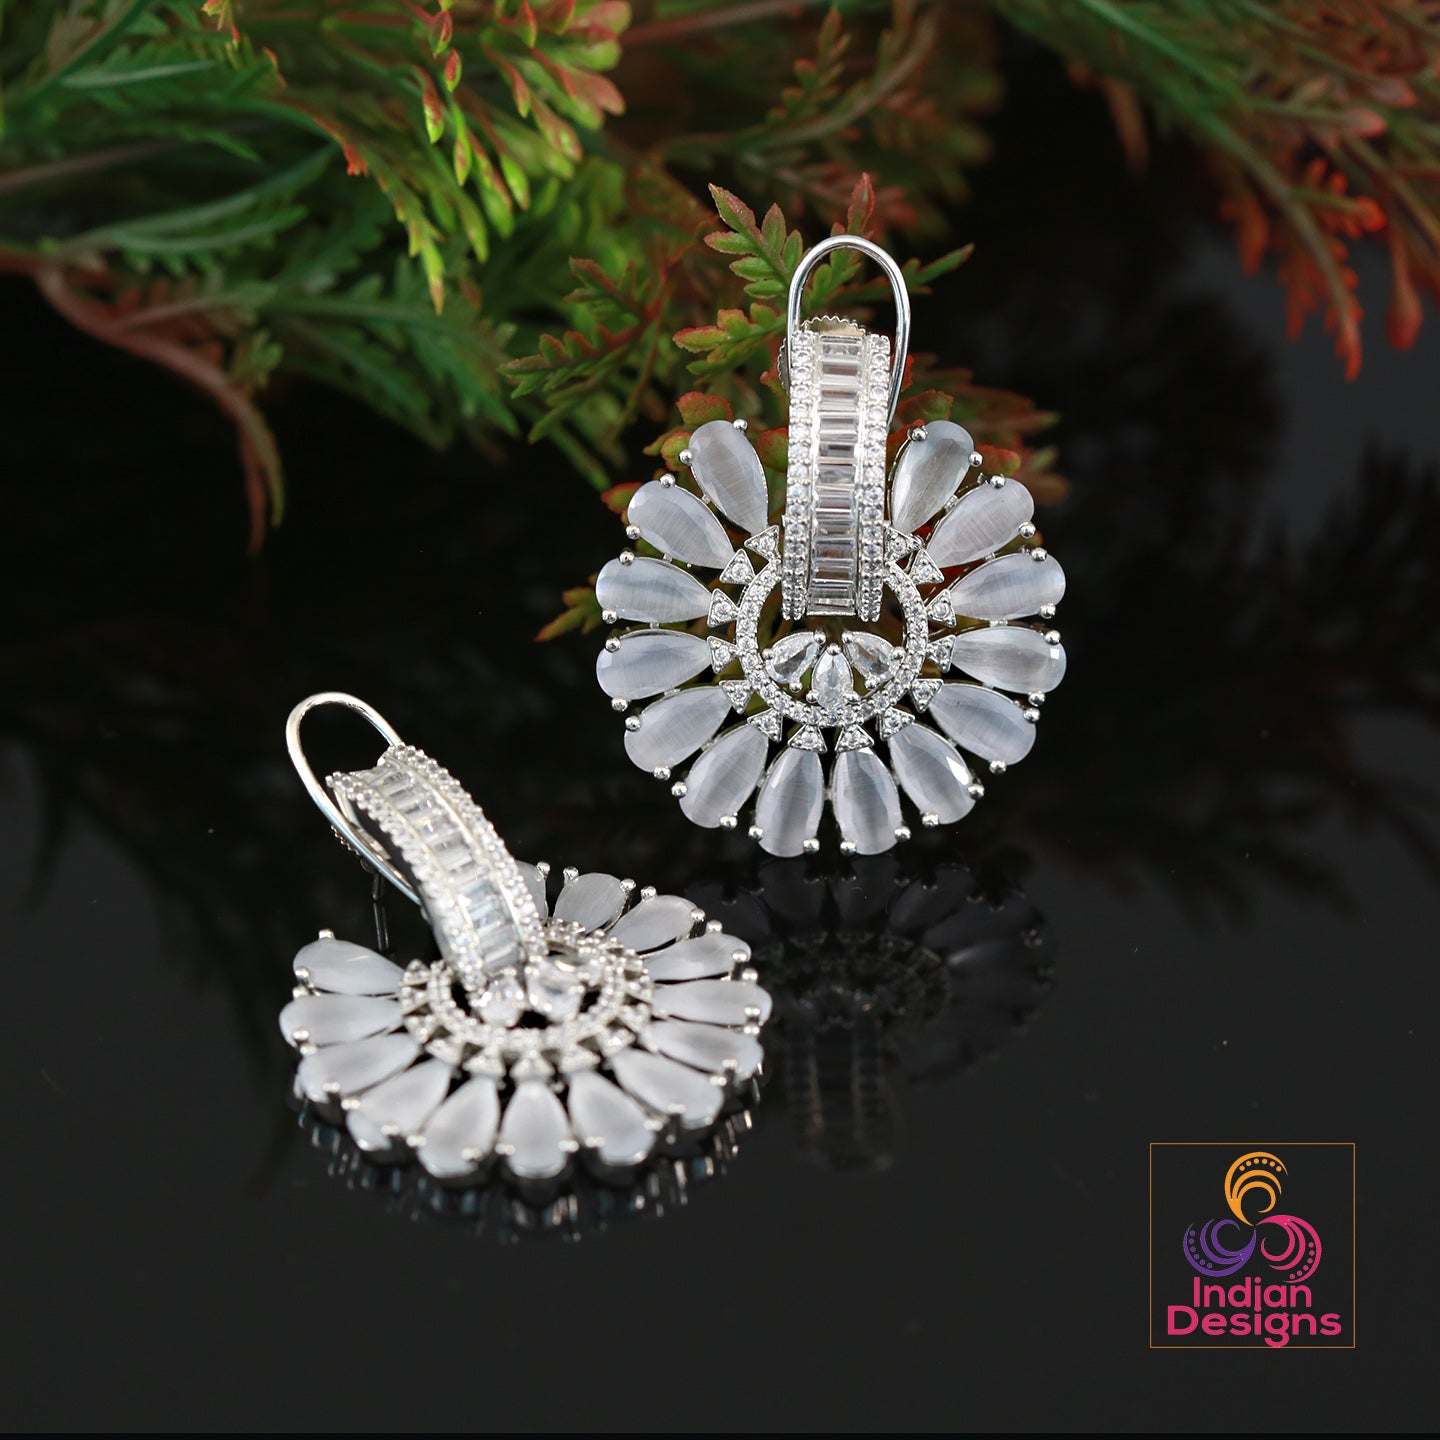 Big flower stud Crystal earrings | Ad stud earrings Peach stones | Rhodium Plated American Diamond stud Earrings | Bollywood style CZ Studs